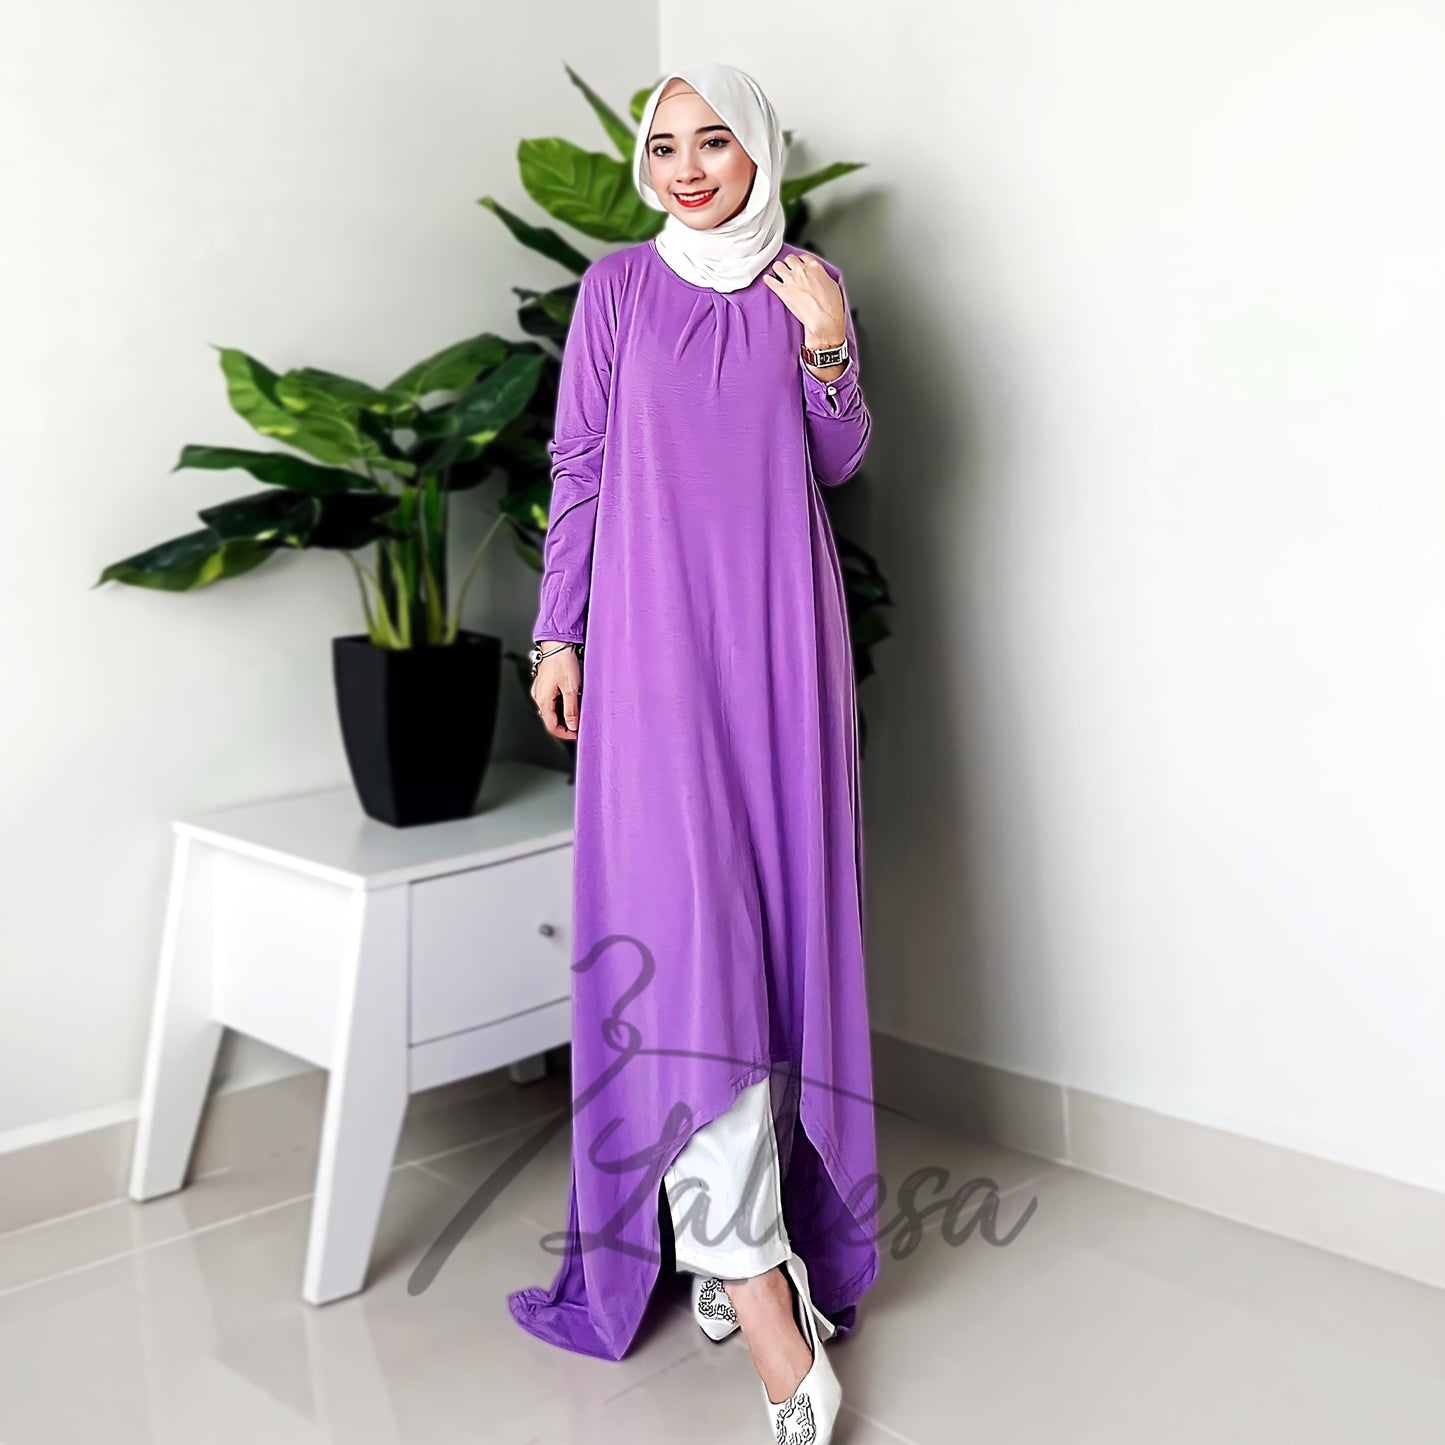 LALEESA LD258286 DRESS NAFISA Plain Round Neck Casual Long Dress Muslimah Dress Women Dress Plus Size Baju Raya 2024